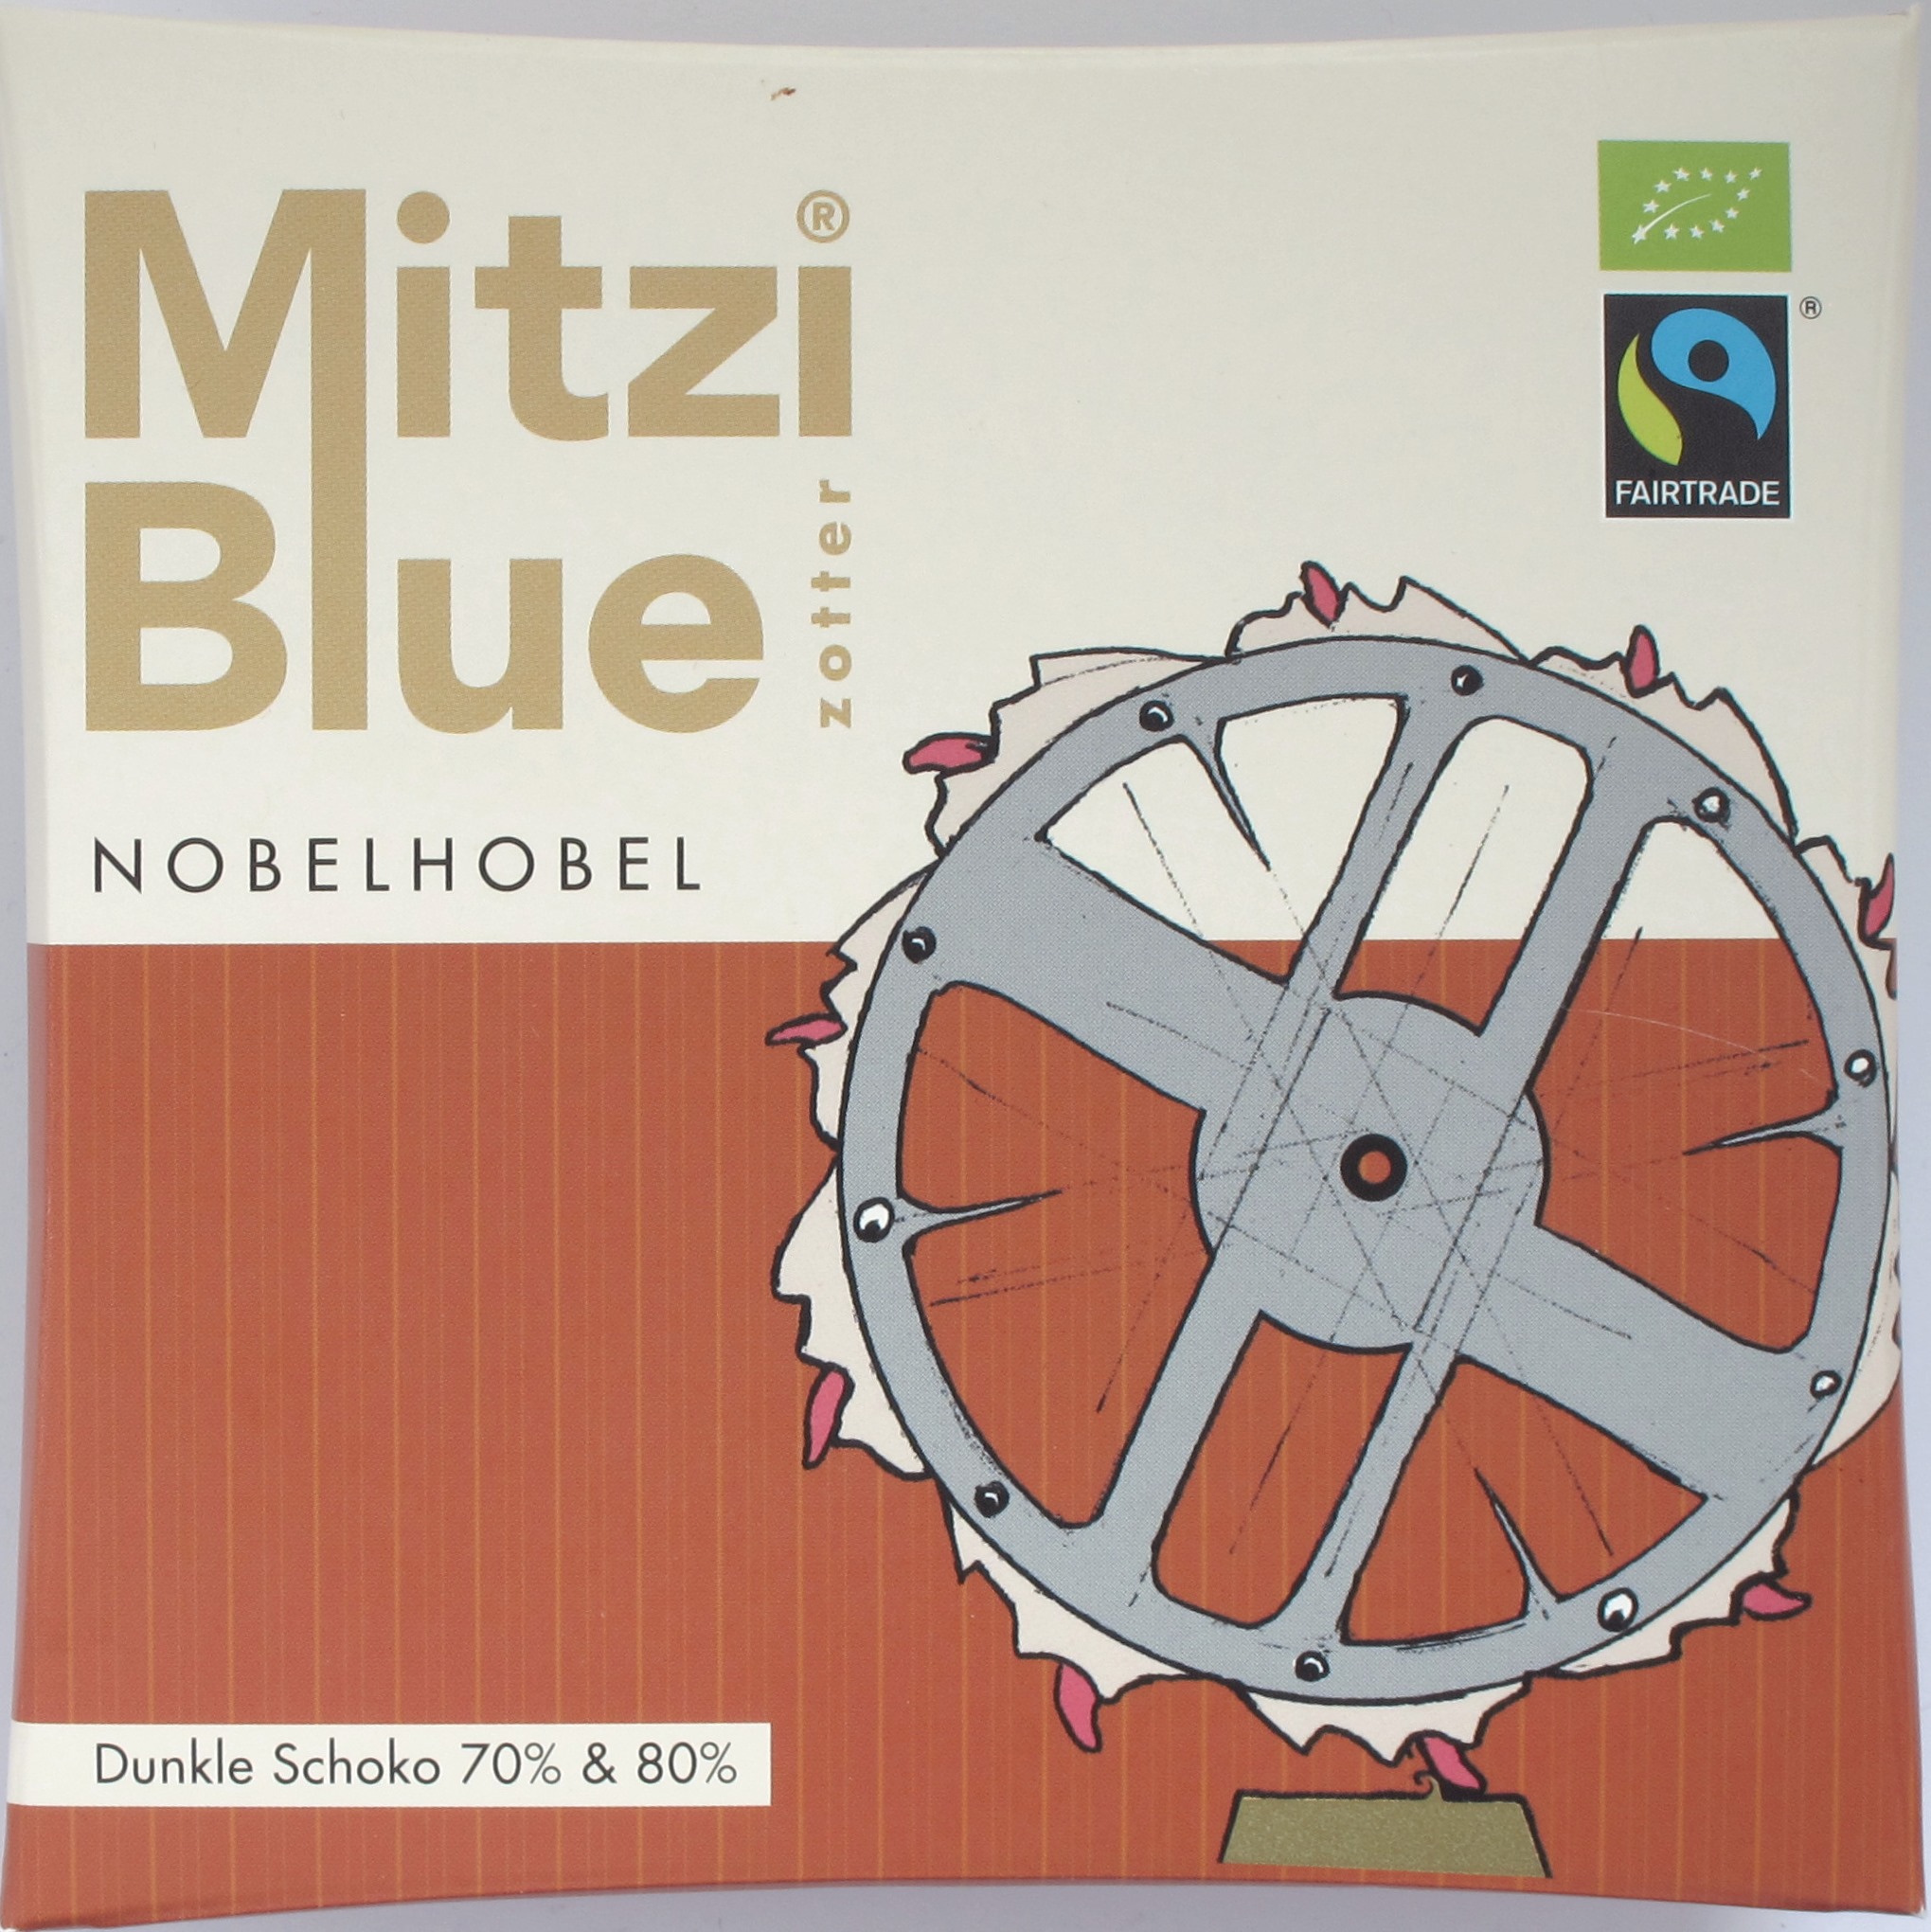 Zotter "Mitzi Blue" Nobelhobel